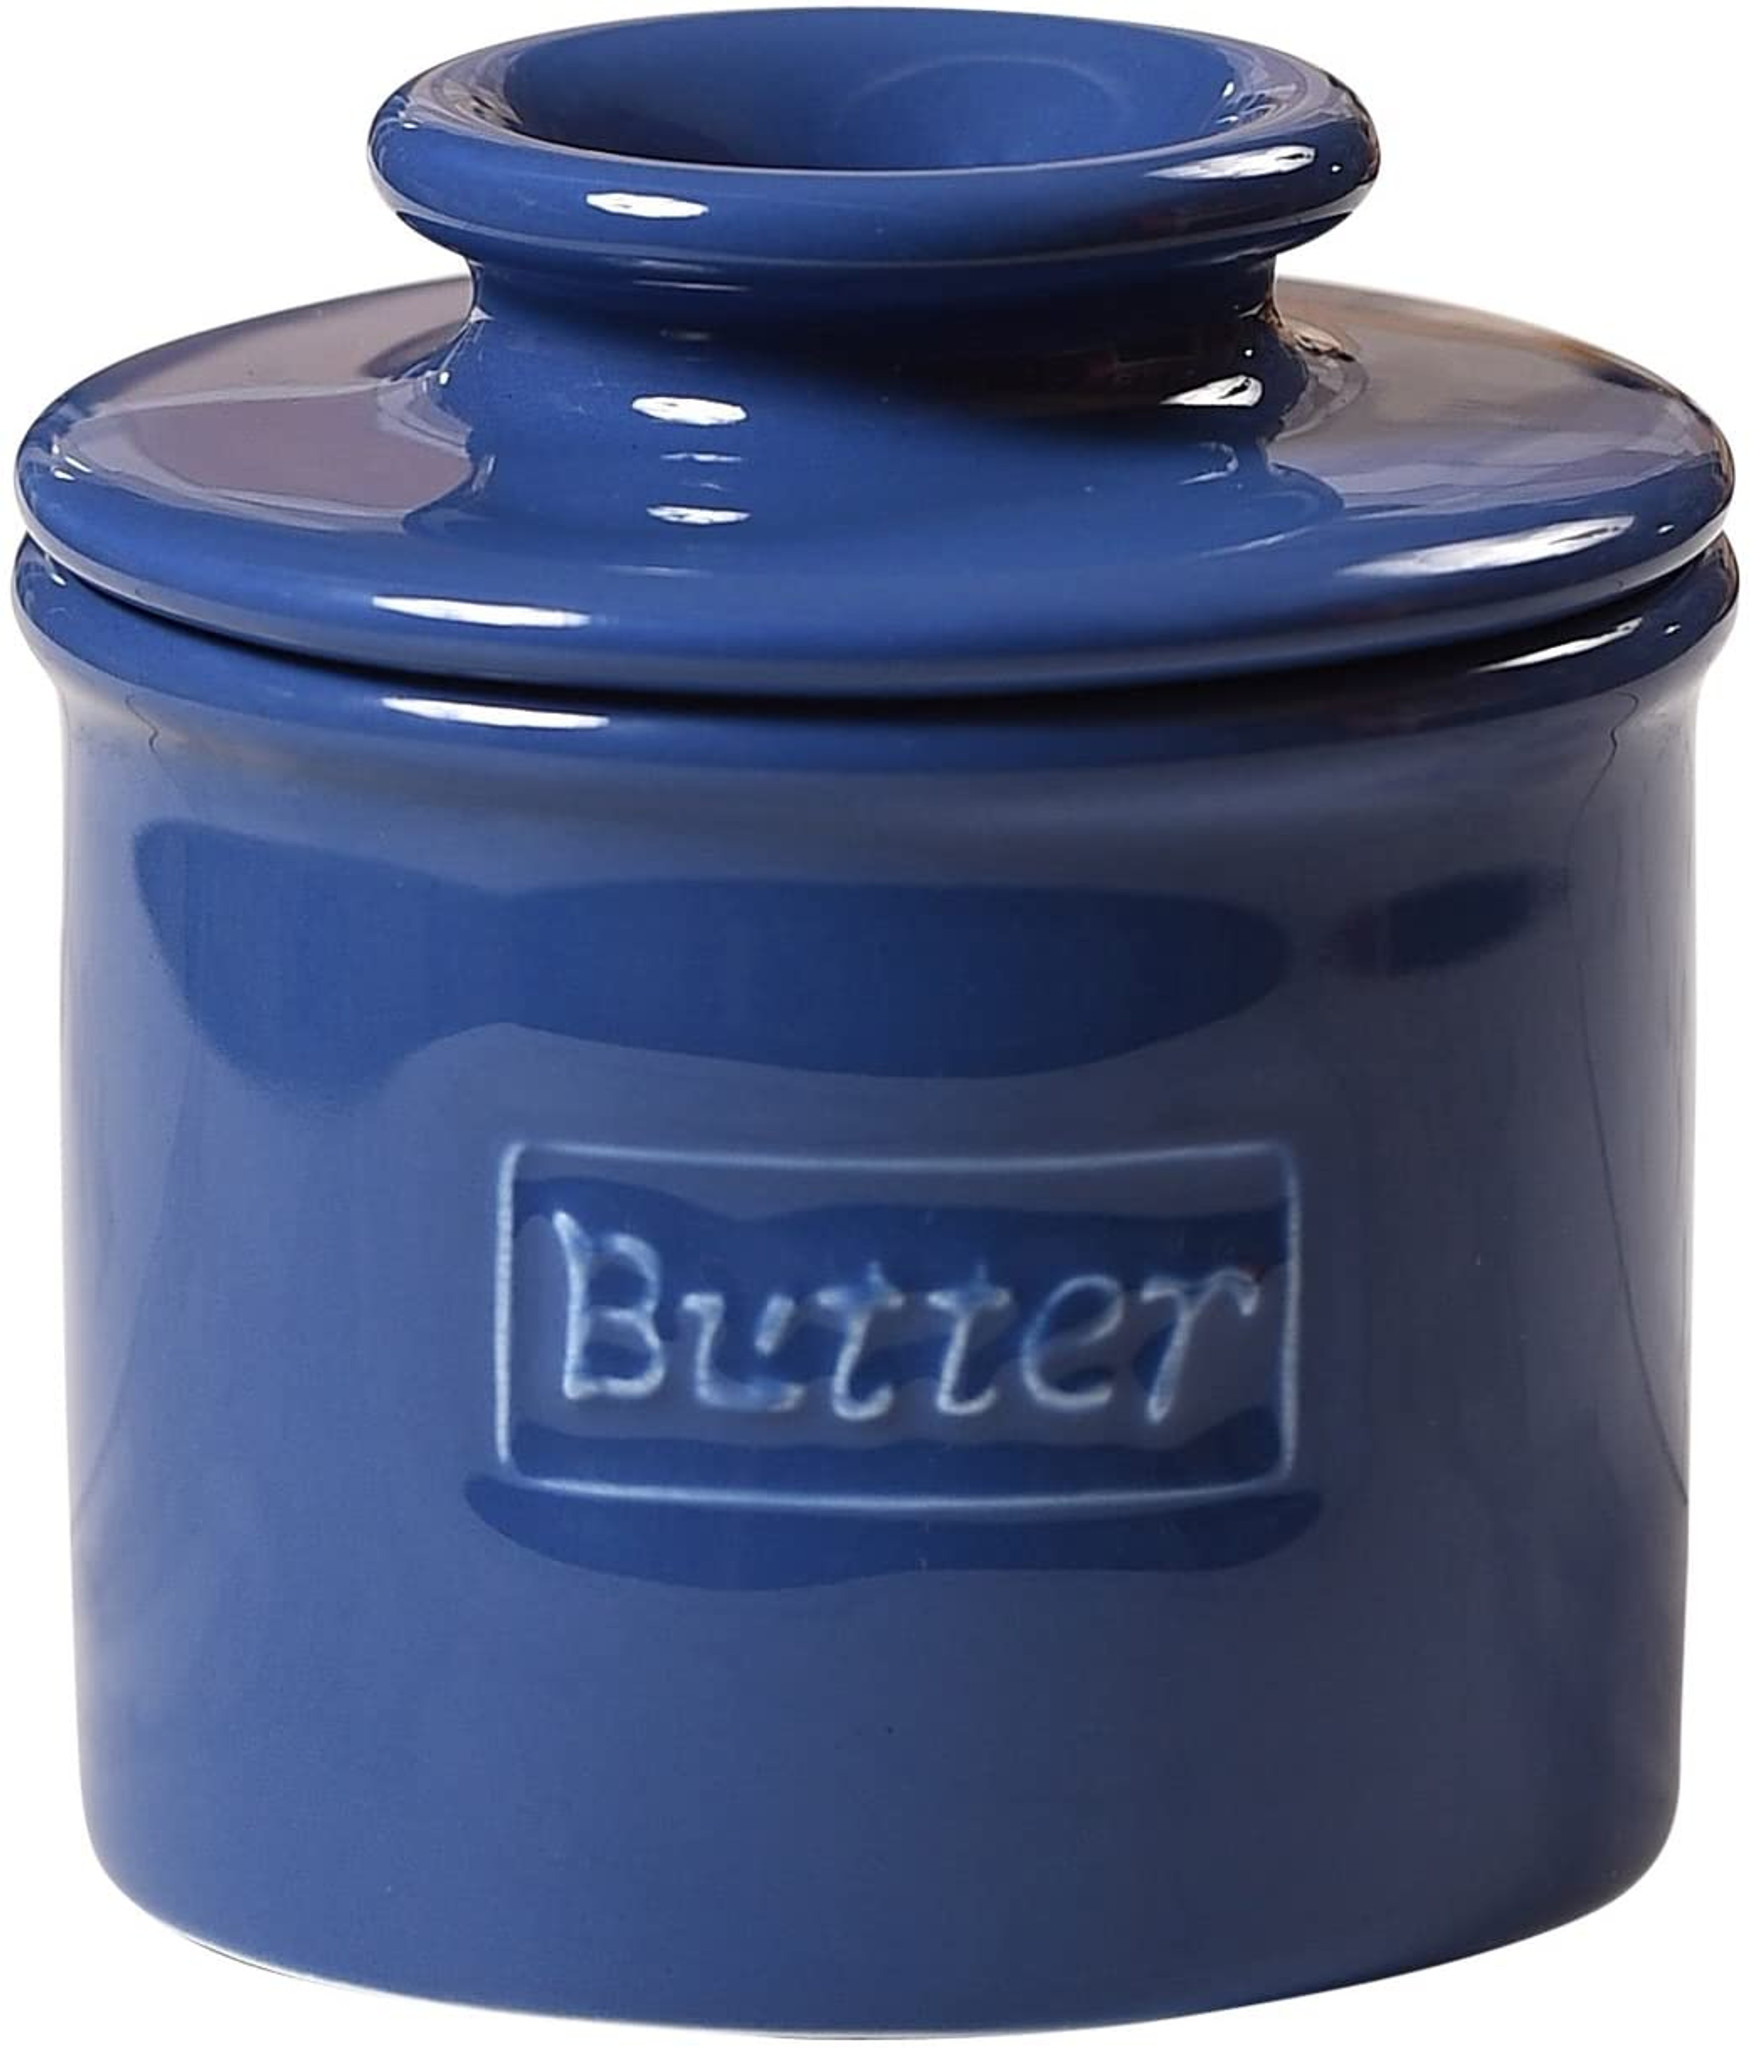 Classic Blue Butter Bell Crock - New Kitchen Store